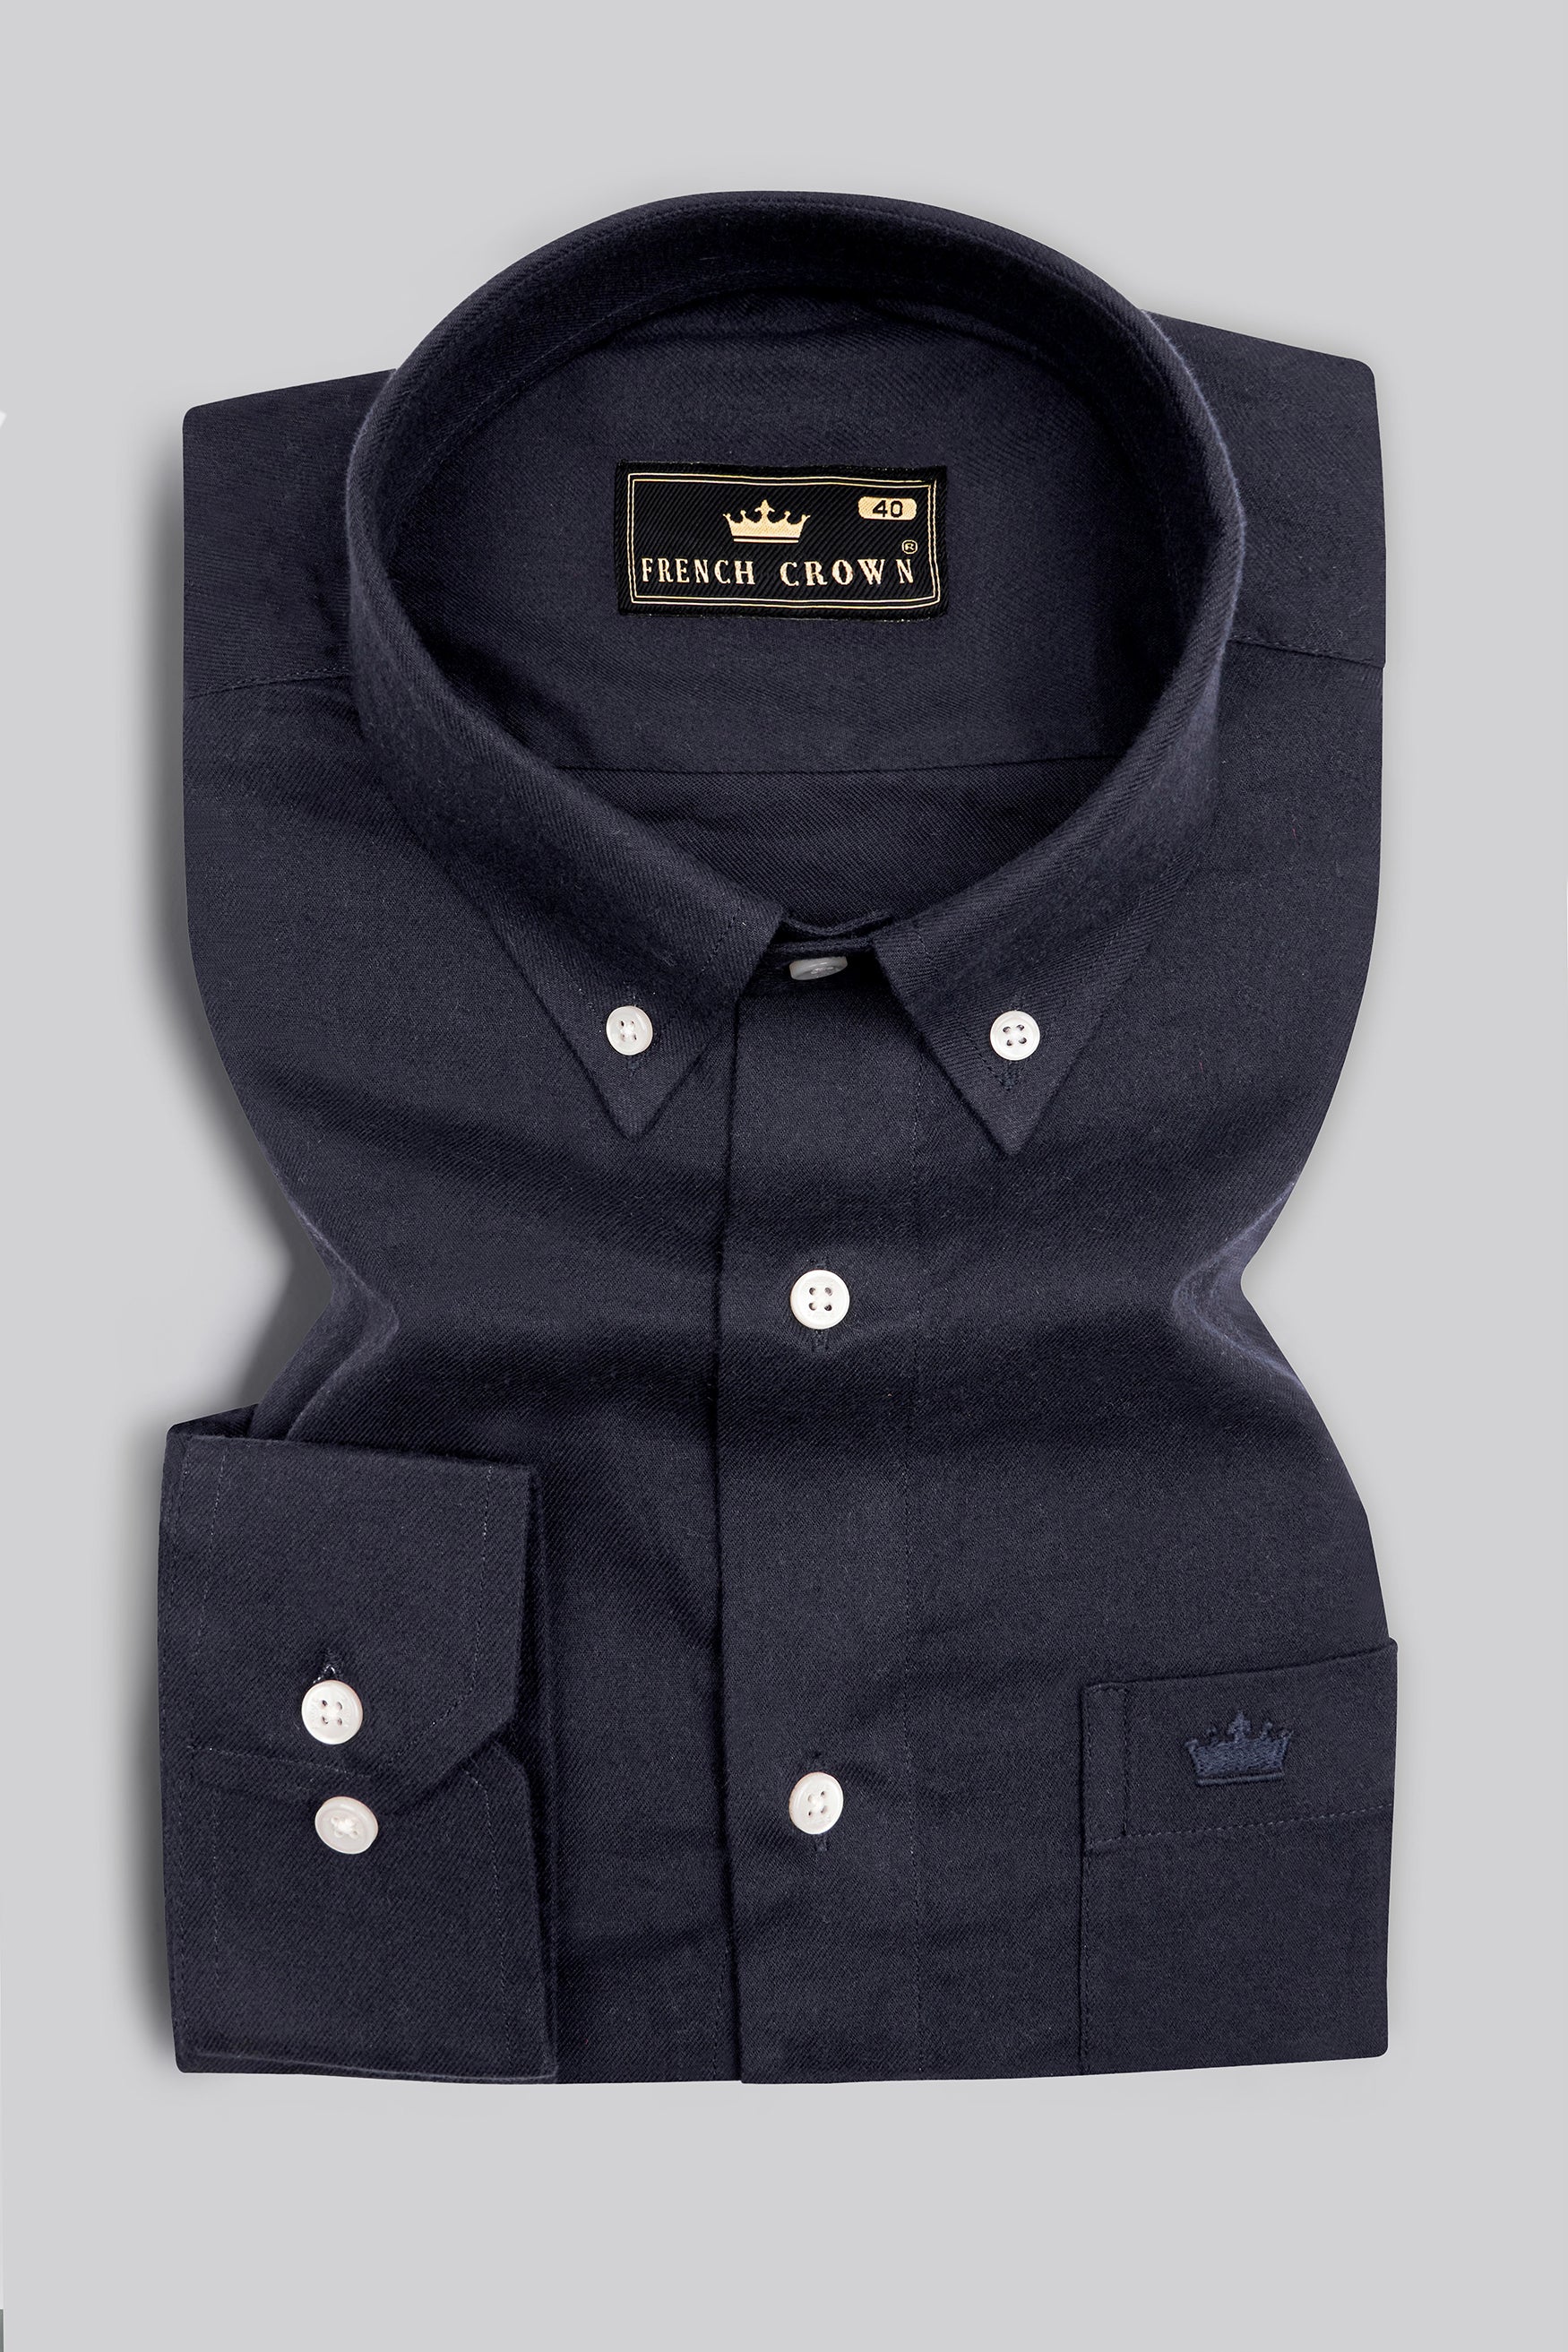 Charade Navy Blue Luxuries linen Shirt